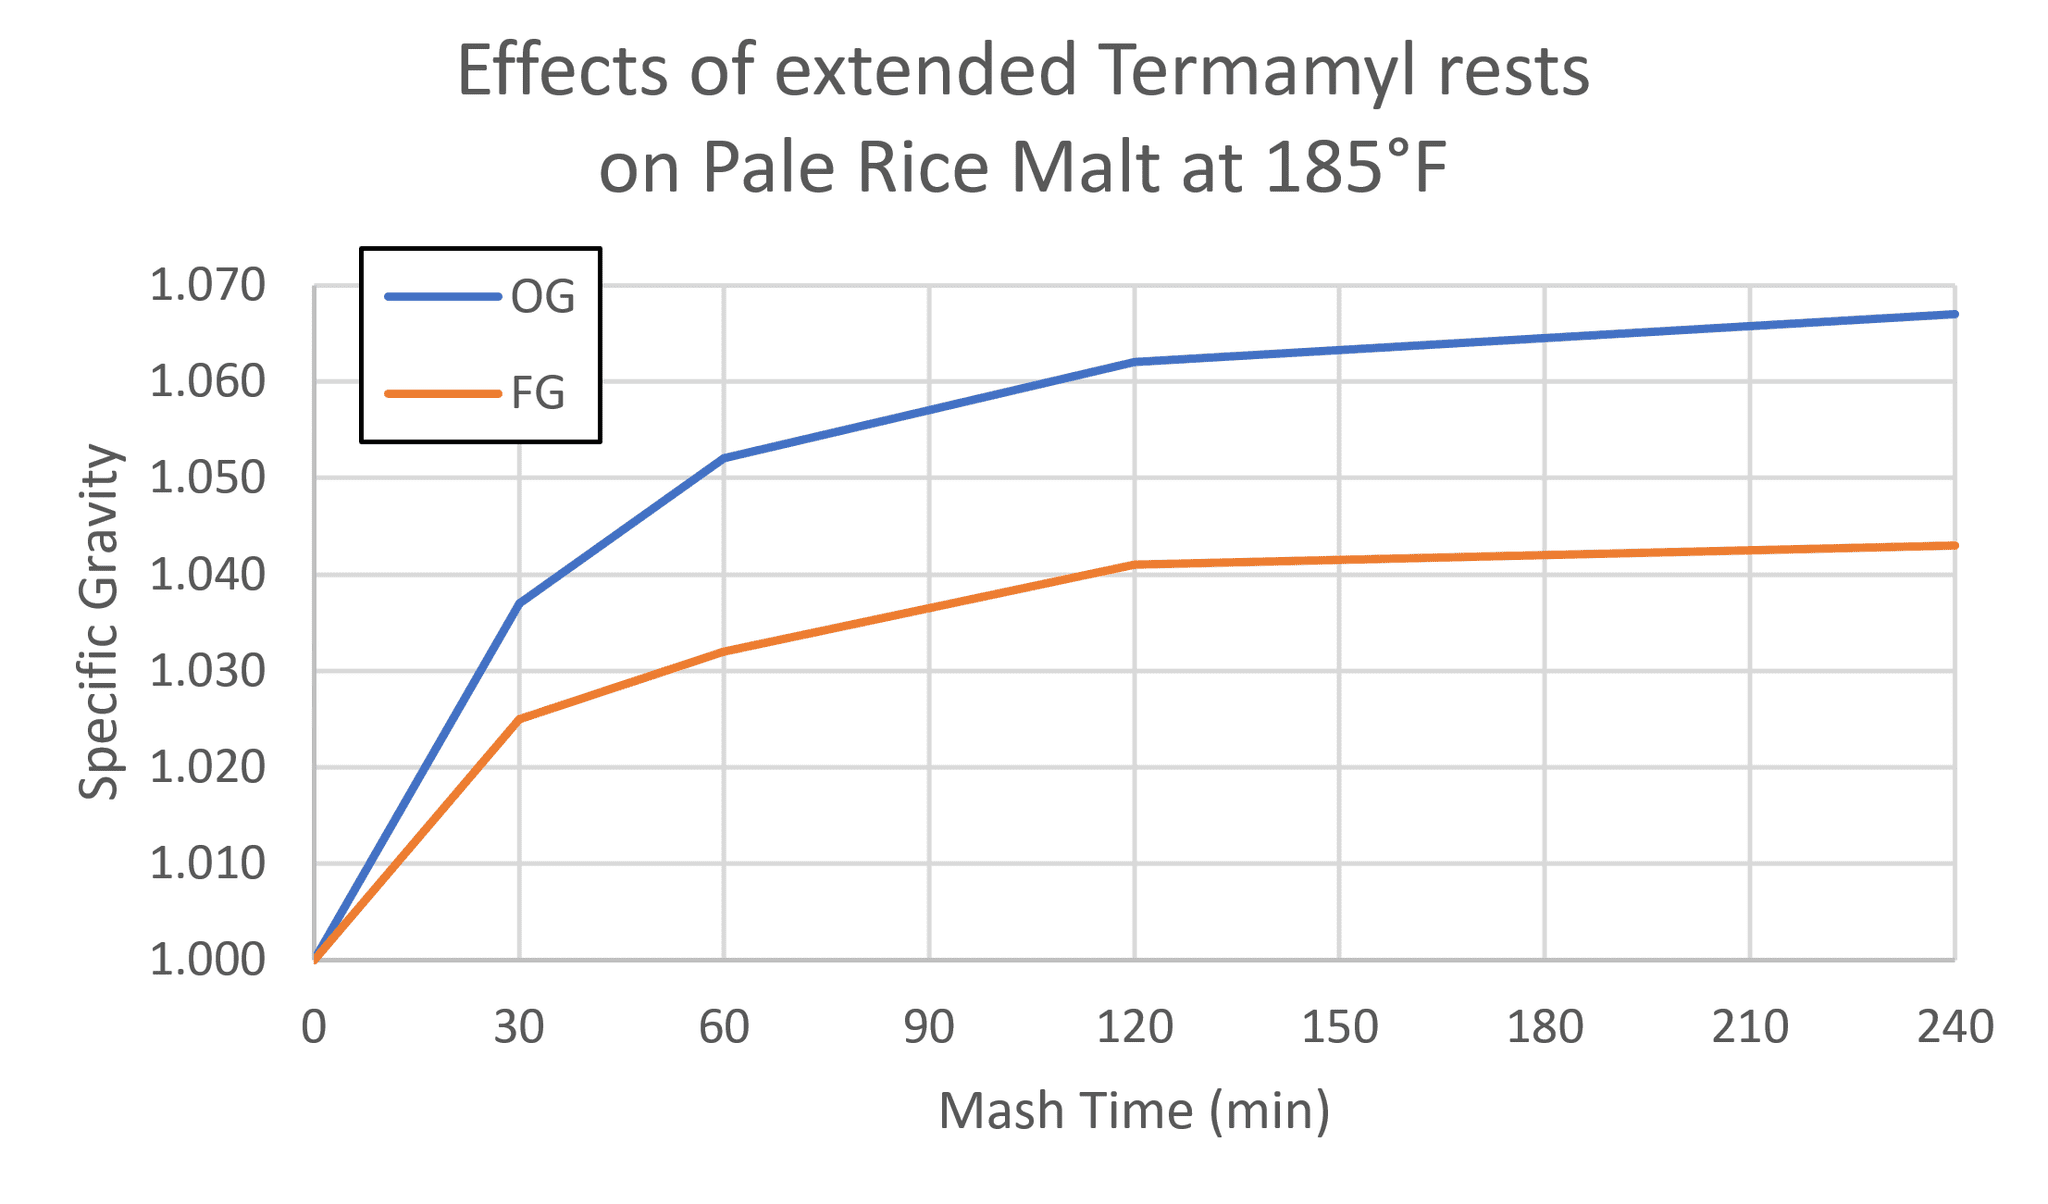 Termamyl experiment on extended rests